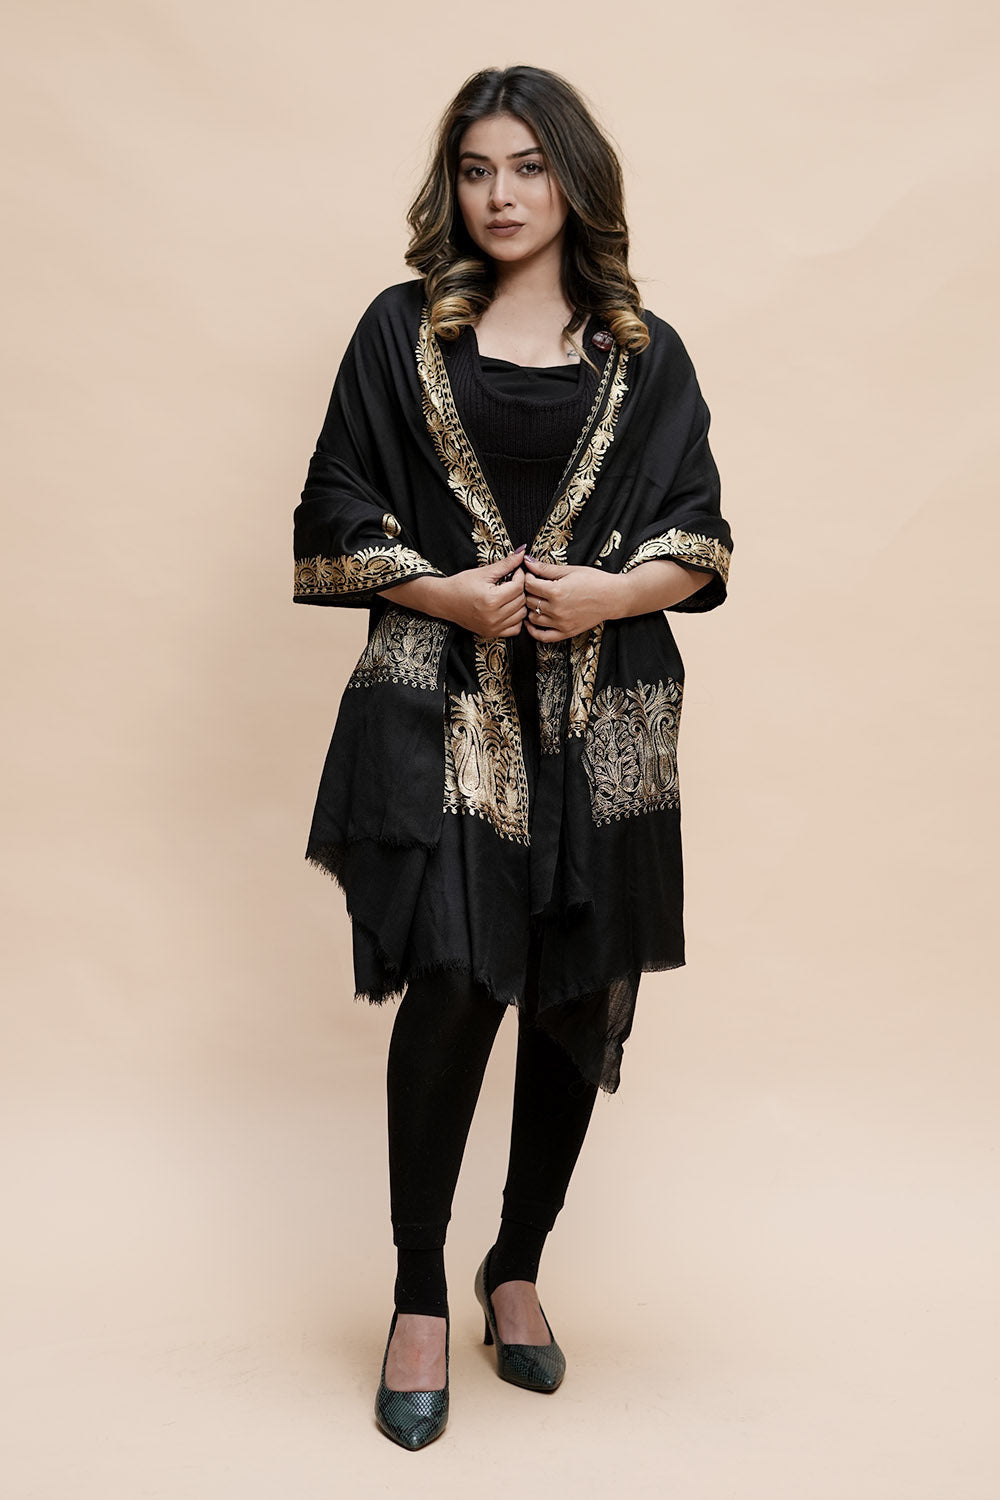 Black Colour Semi Pashmina Shawl Enriched With Ethnic Heavy